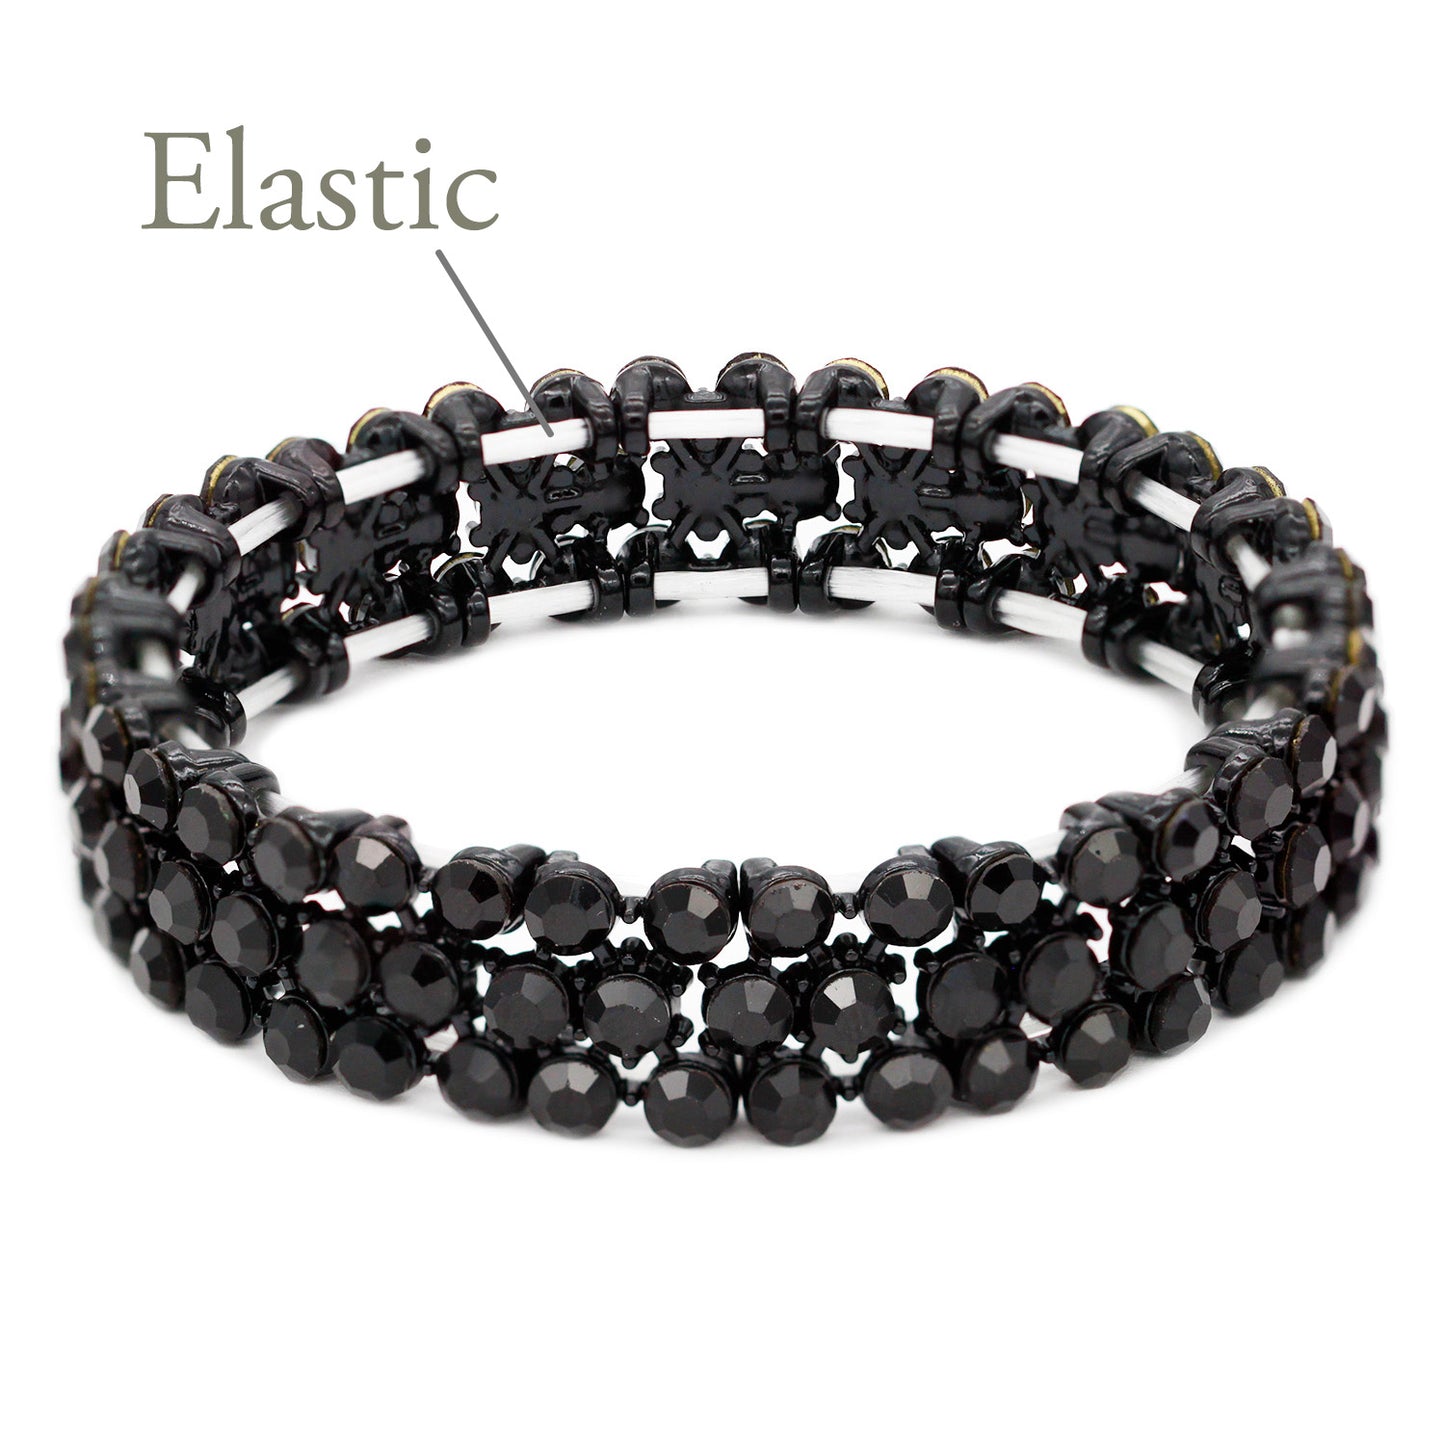 Lavencious Round Shape Rhinestones Thin 3 Rows Elastic Stretch Bracelet Party Jewelry for Women 7"(Black Jet)